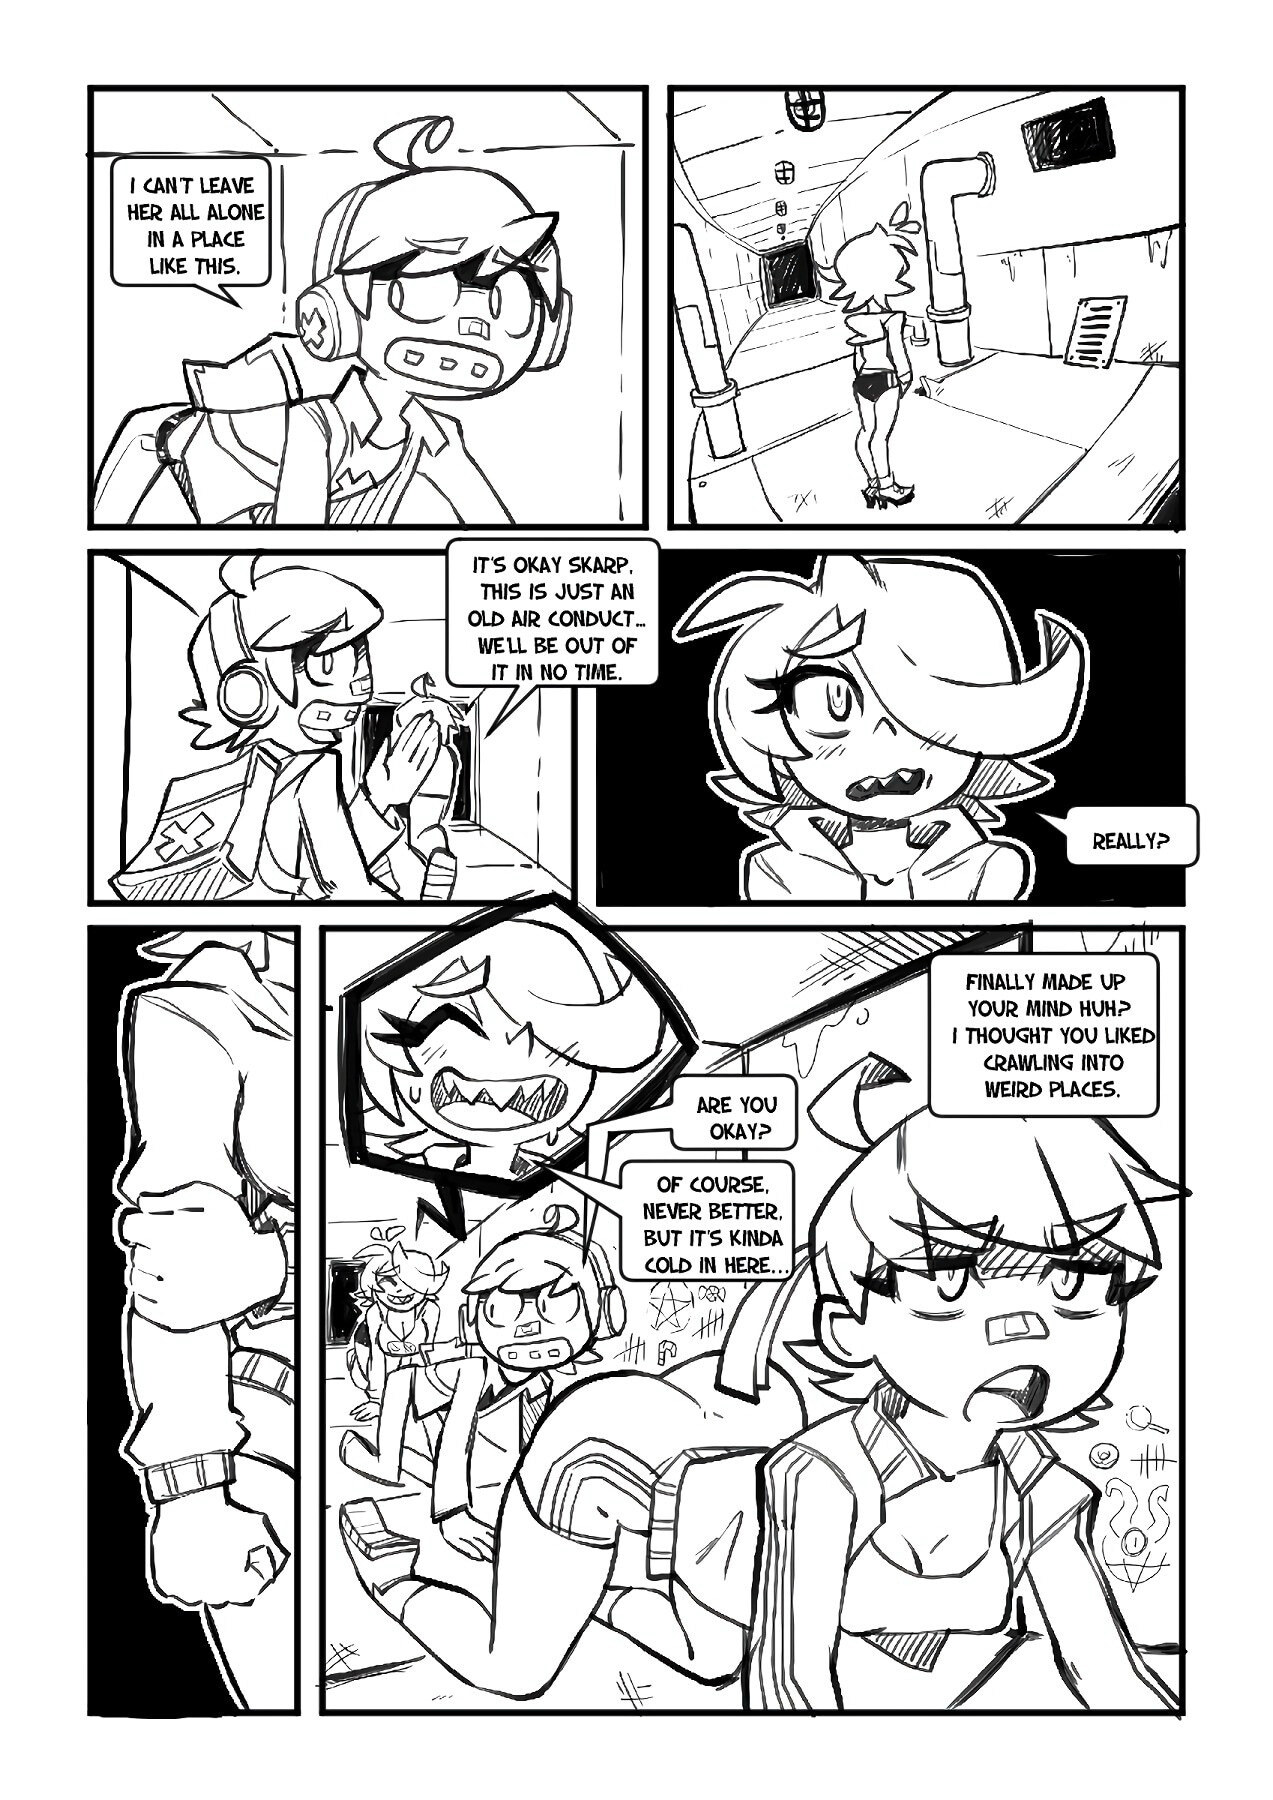 Skarpworld 7: Milk Crisis - Page 10